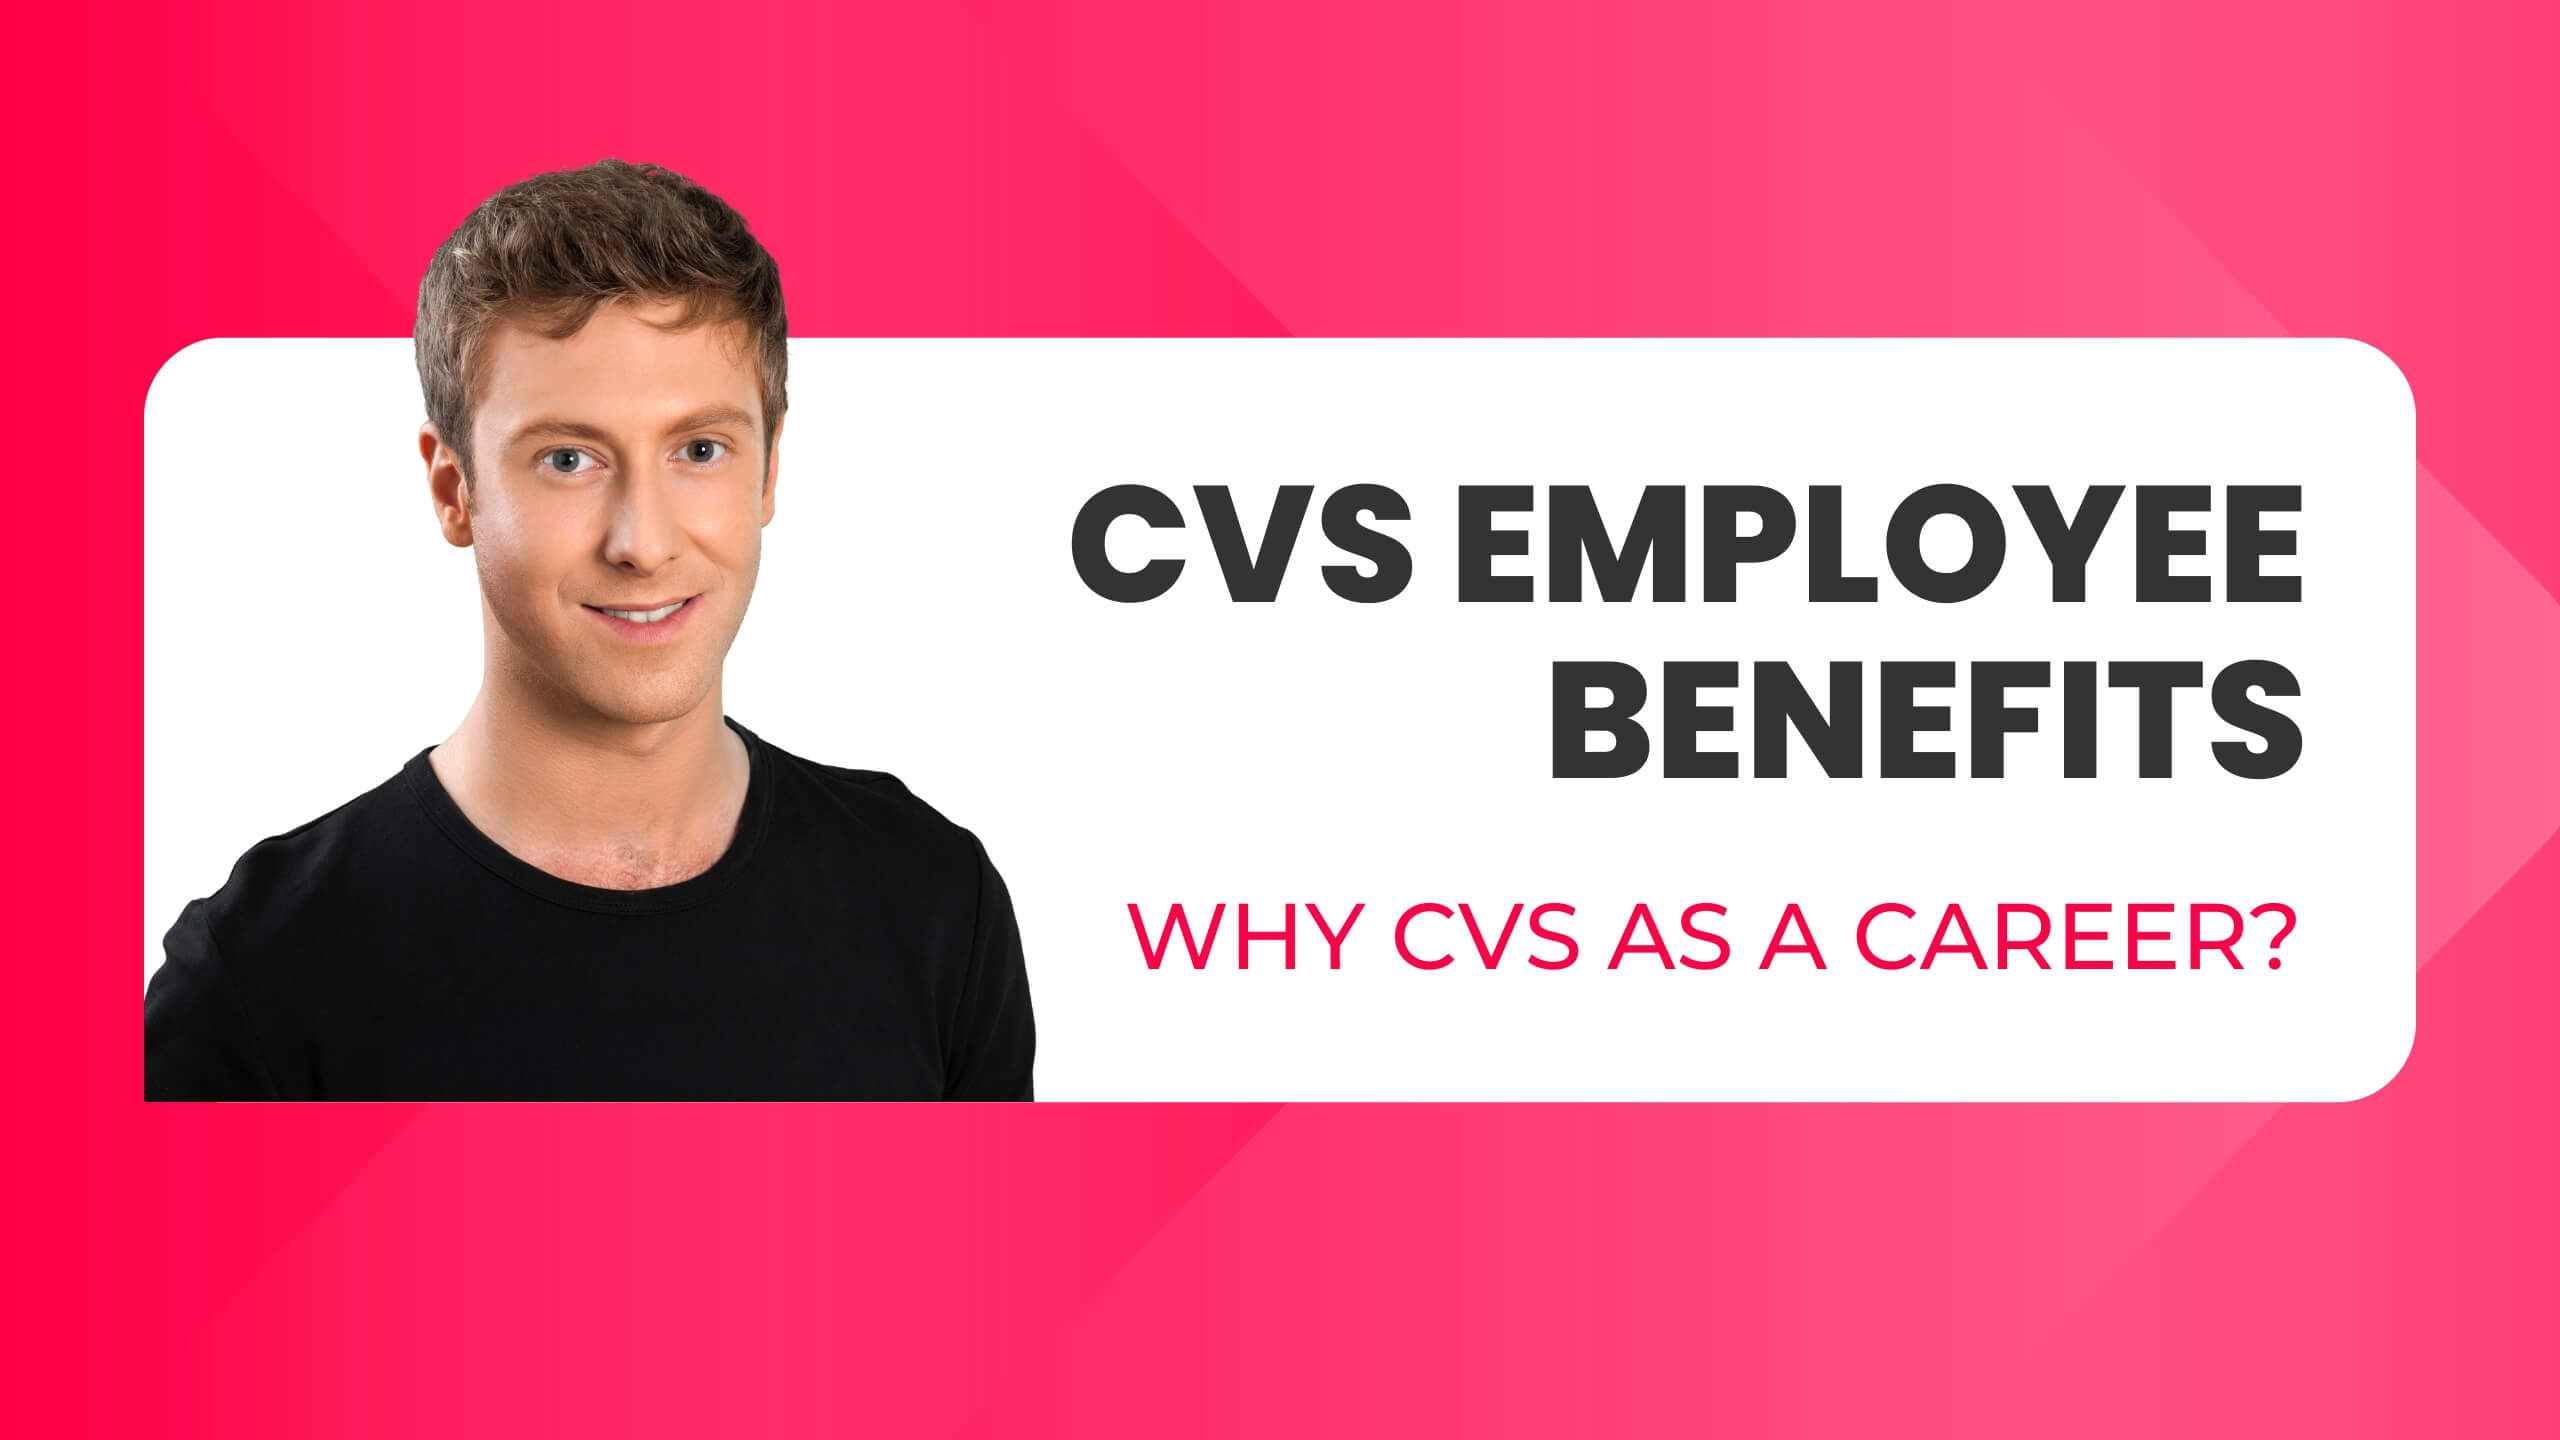 CVS Employee Benefits and Advantages